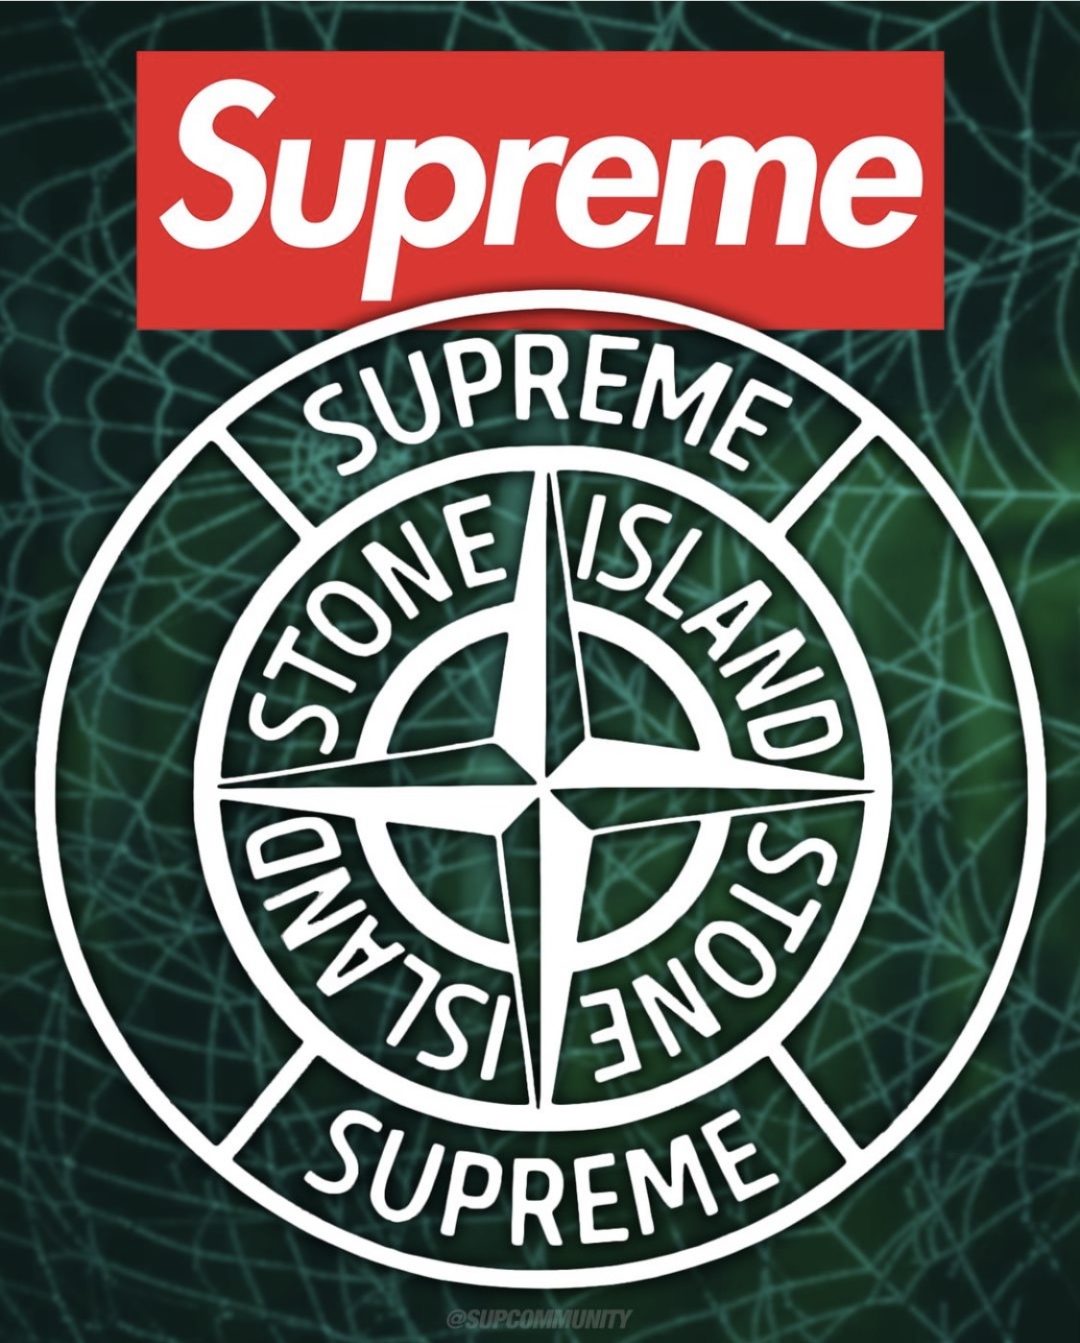 supreme-stone-island-collaboration-release-23fw-23aw-release-2023